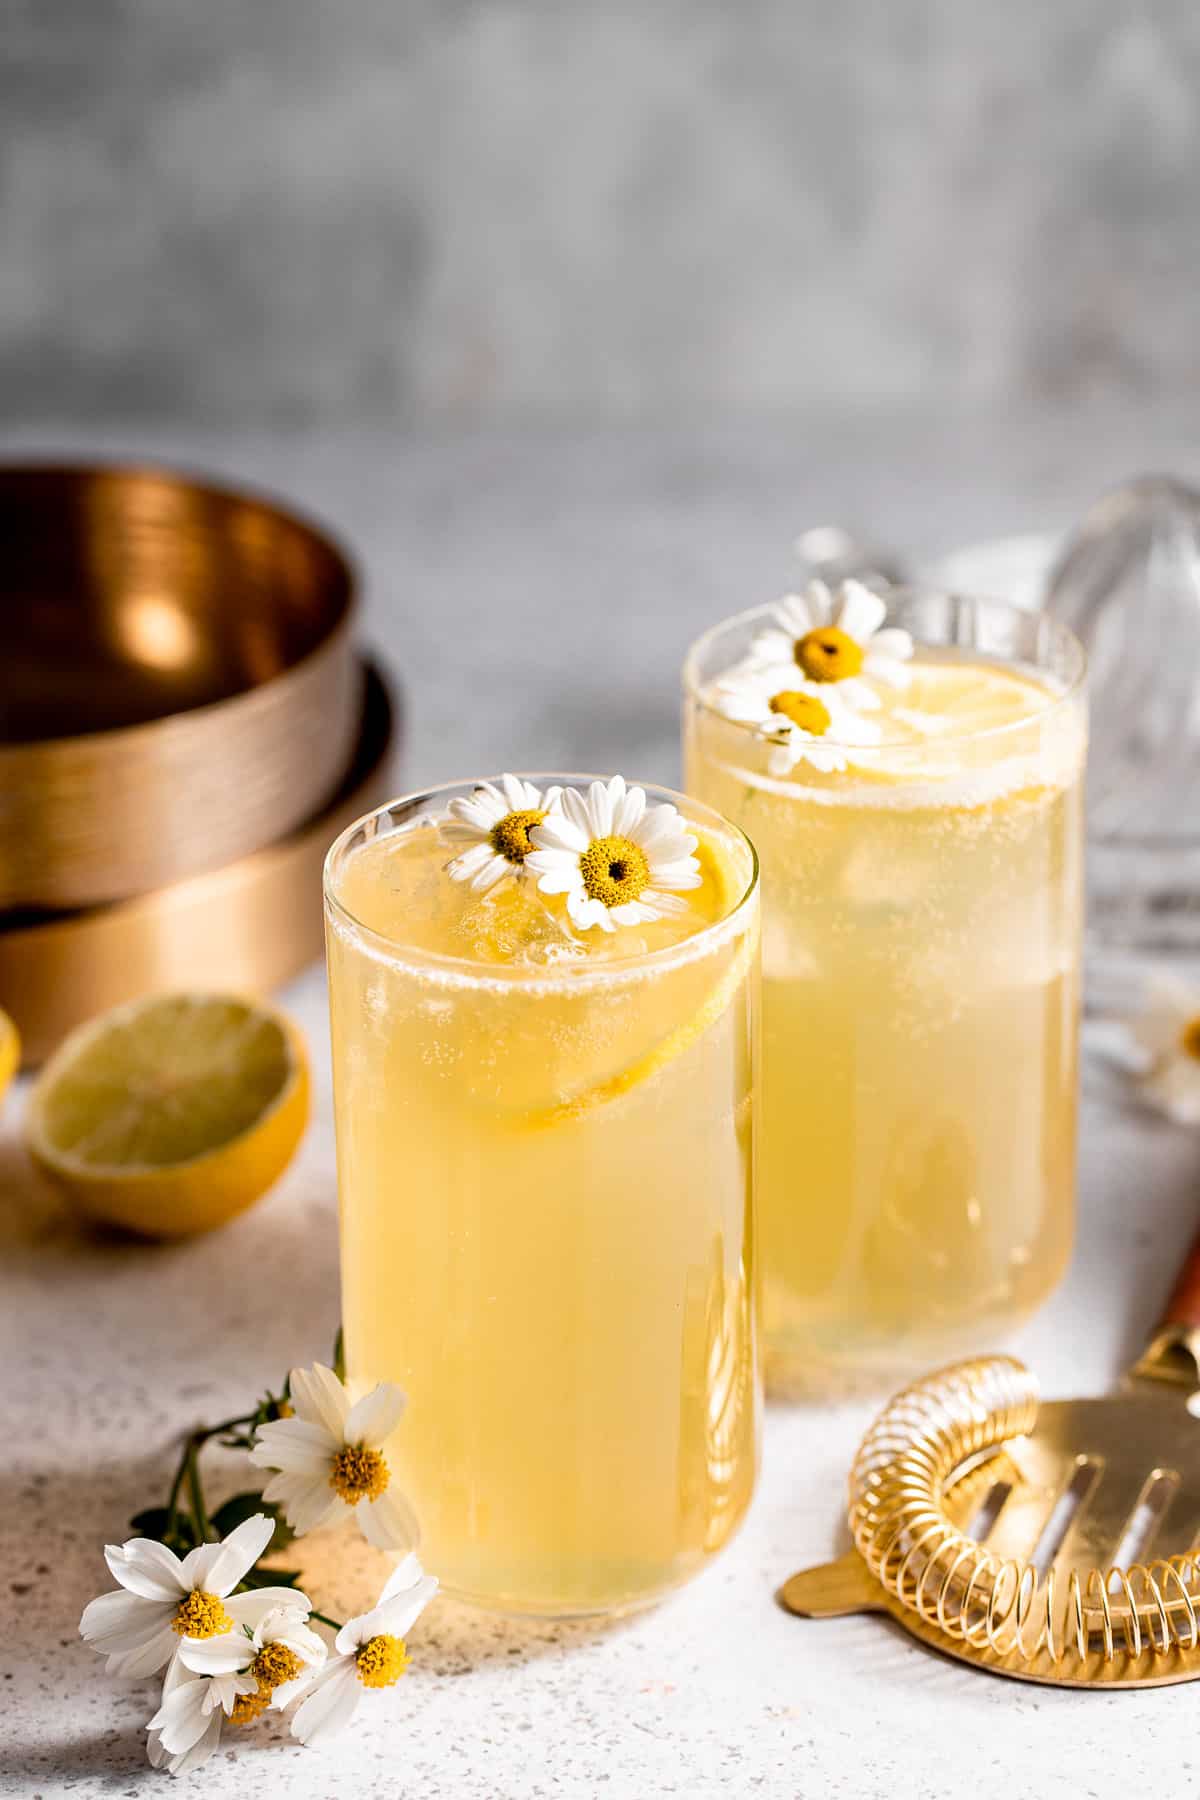 lynchburg lemonade in tall glasses with white flowers